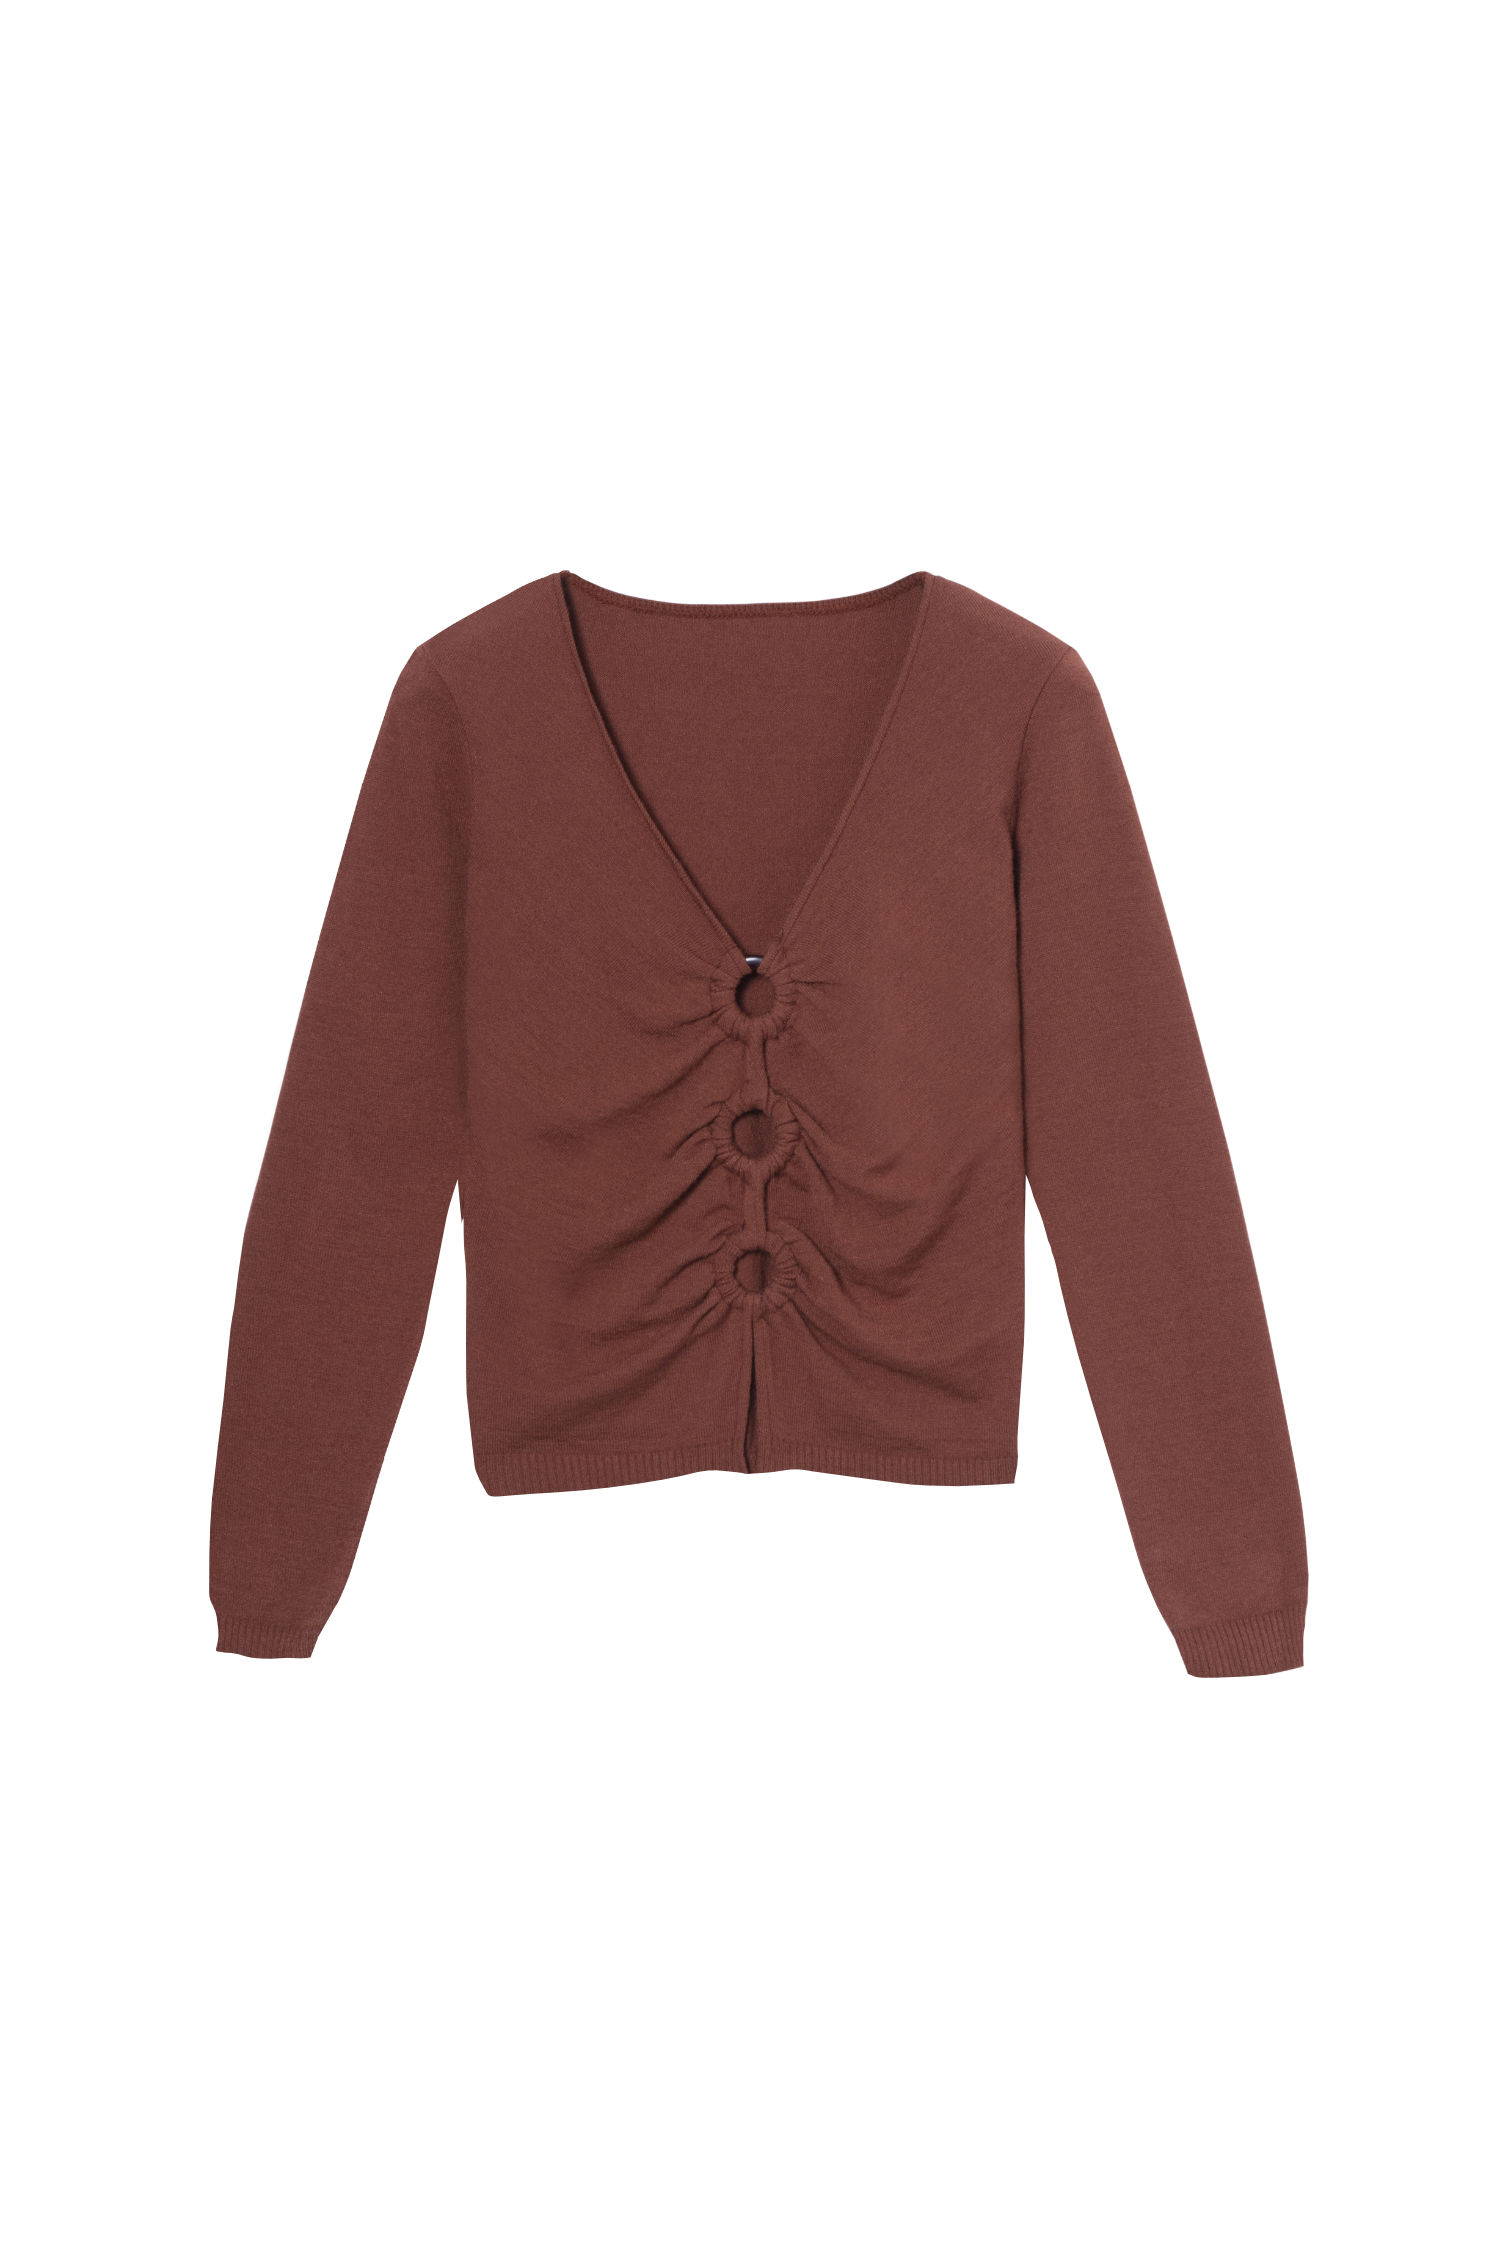 Musier Paris Brown Sweater